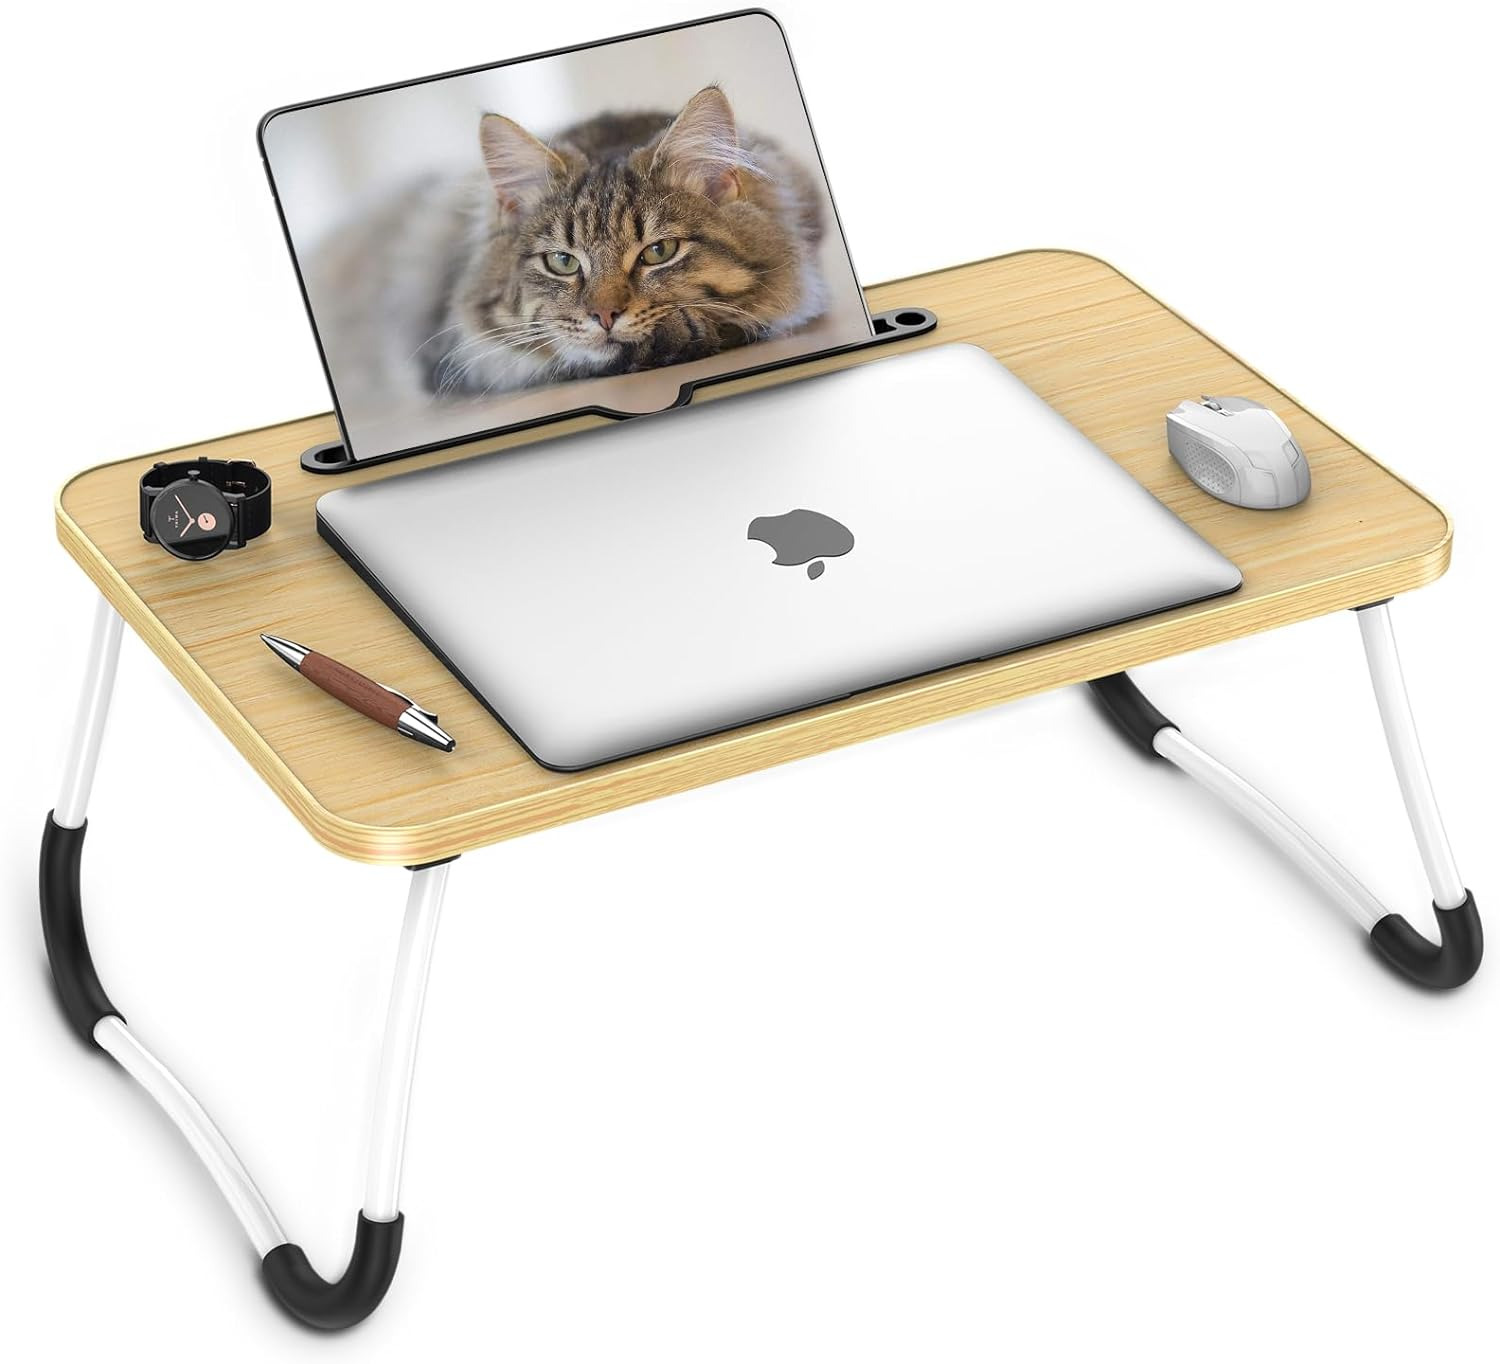 Laptop Lap Desk, Foldable Laptop Table Tray, Laptop Bed Desk Laptop Stand for Be